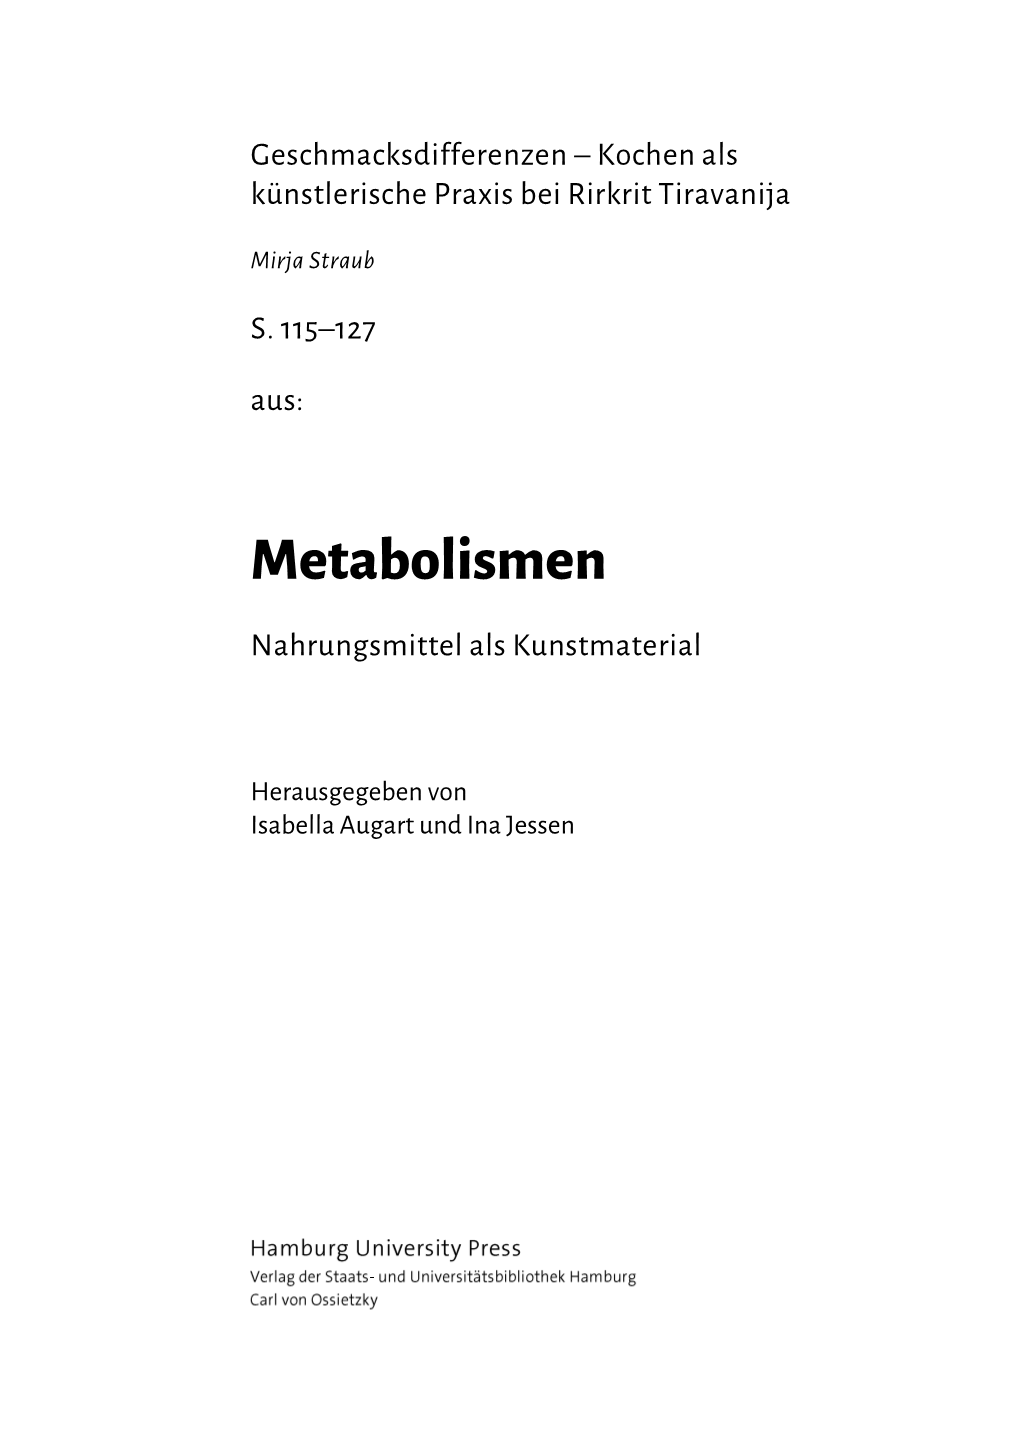 Metabolismen